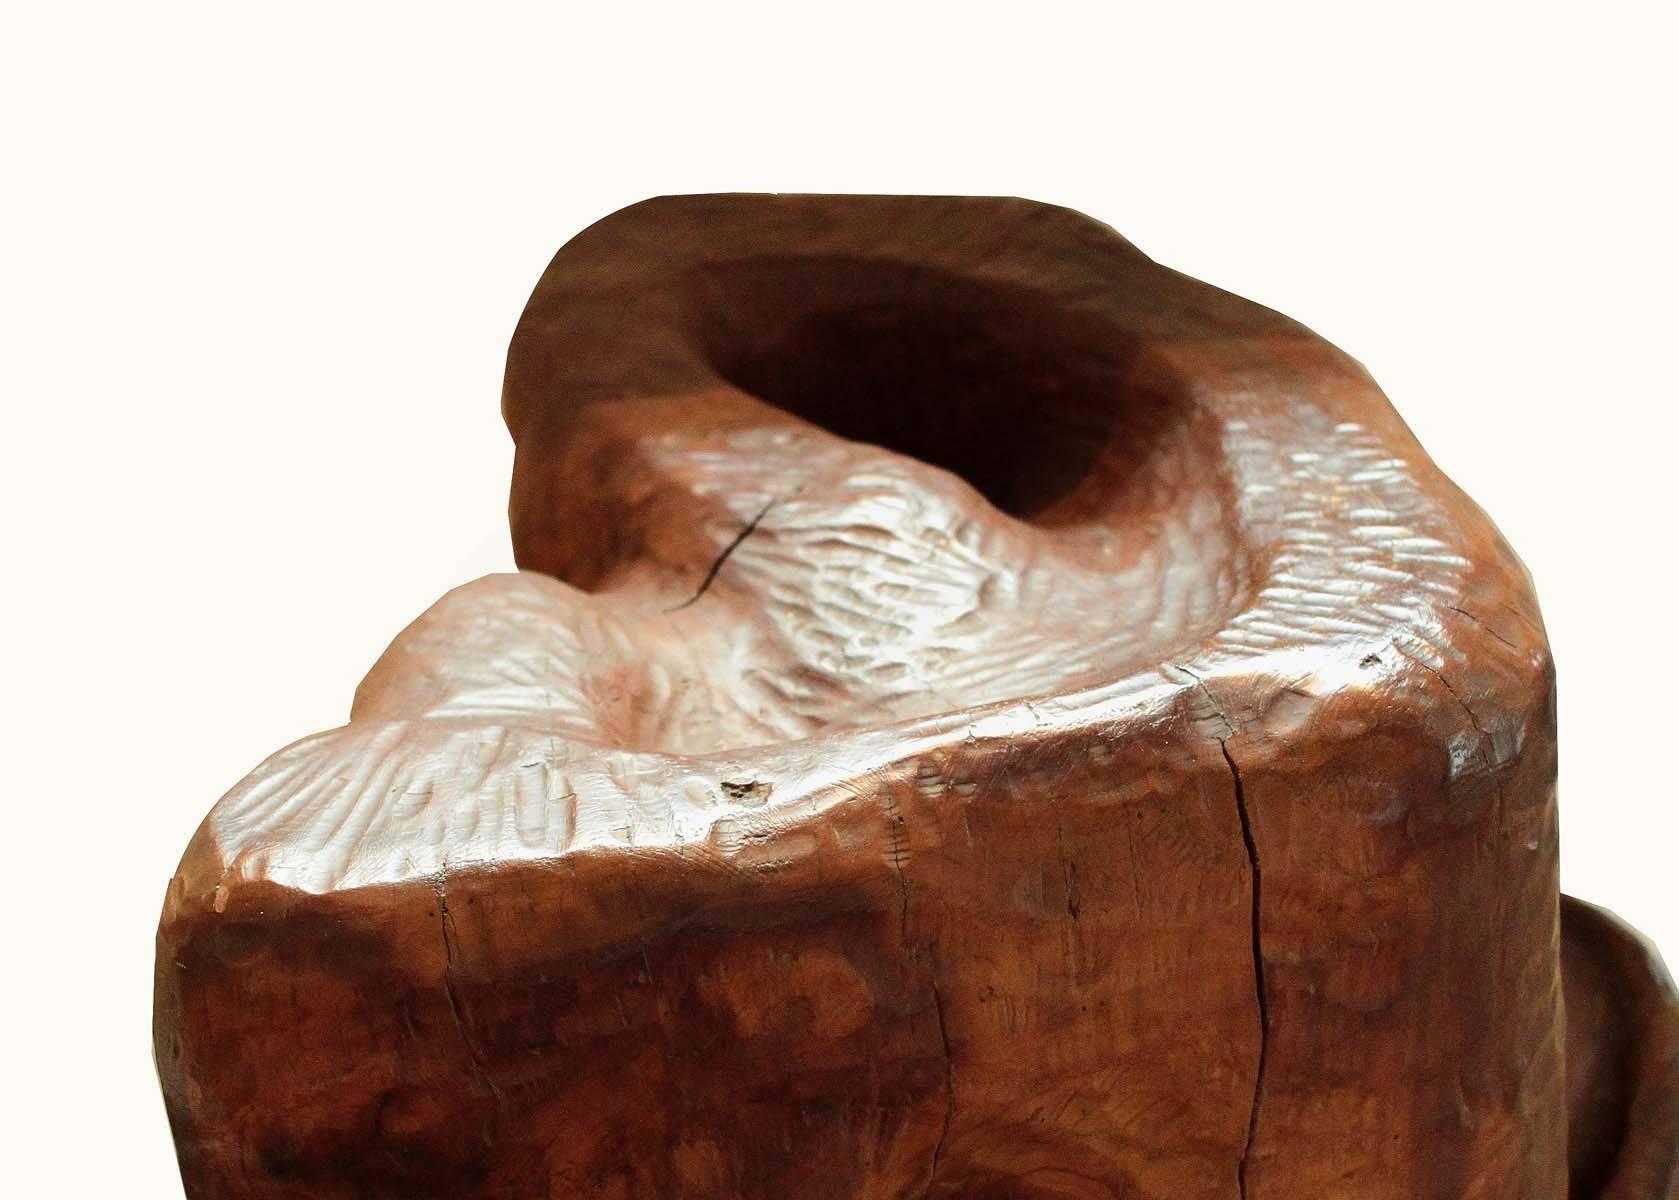 American Edmund Spiro Wood Sculpture For Sale